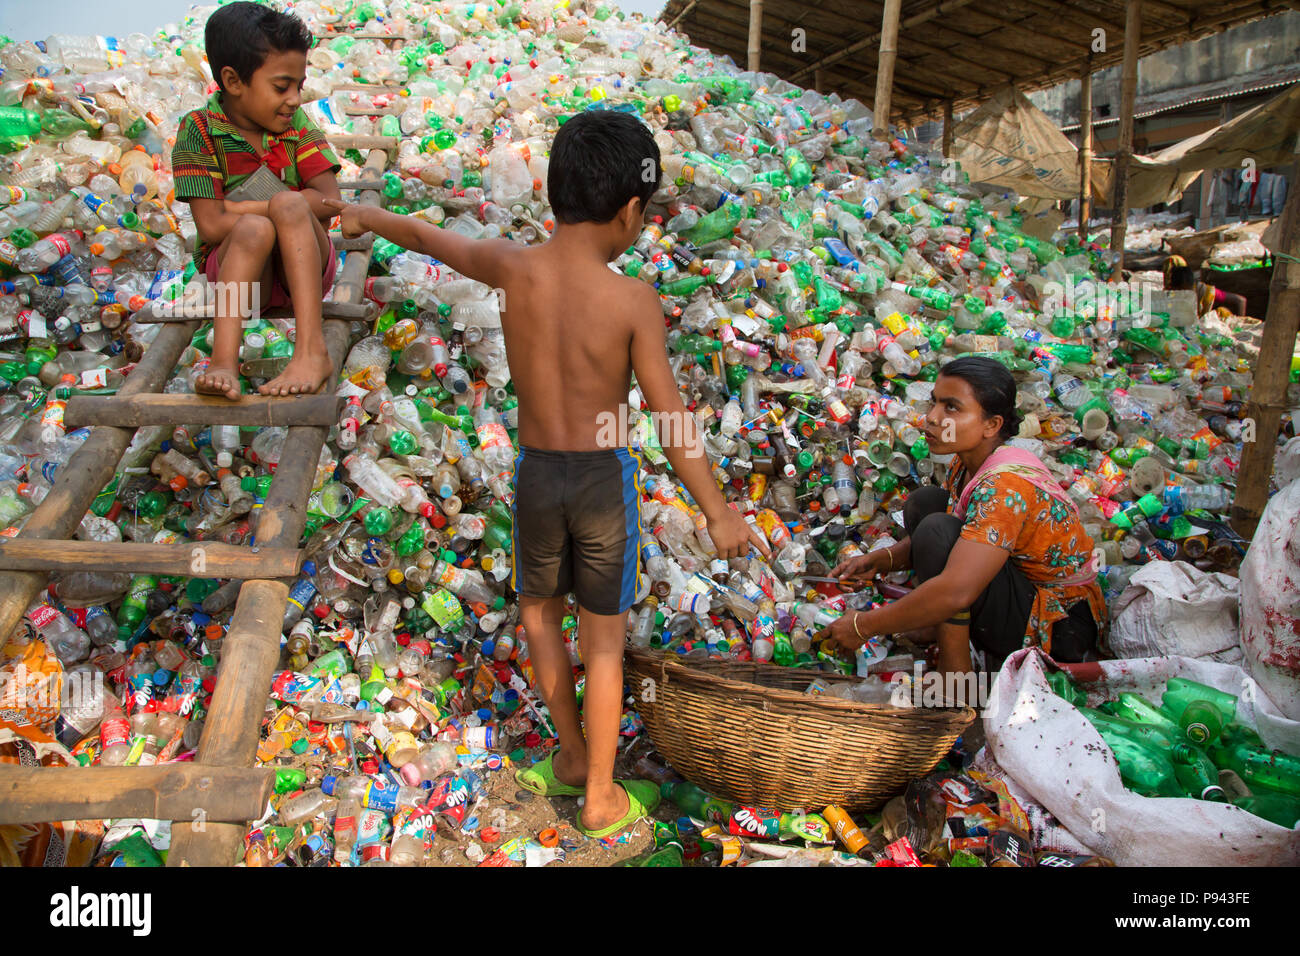 Mutter in Kunststoff Recycling Factory in Hazaribagh, Dhaka, Bangladesch arbeiten Stockfoto